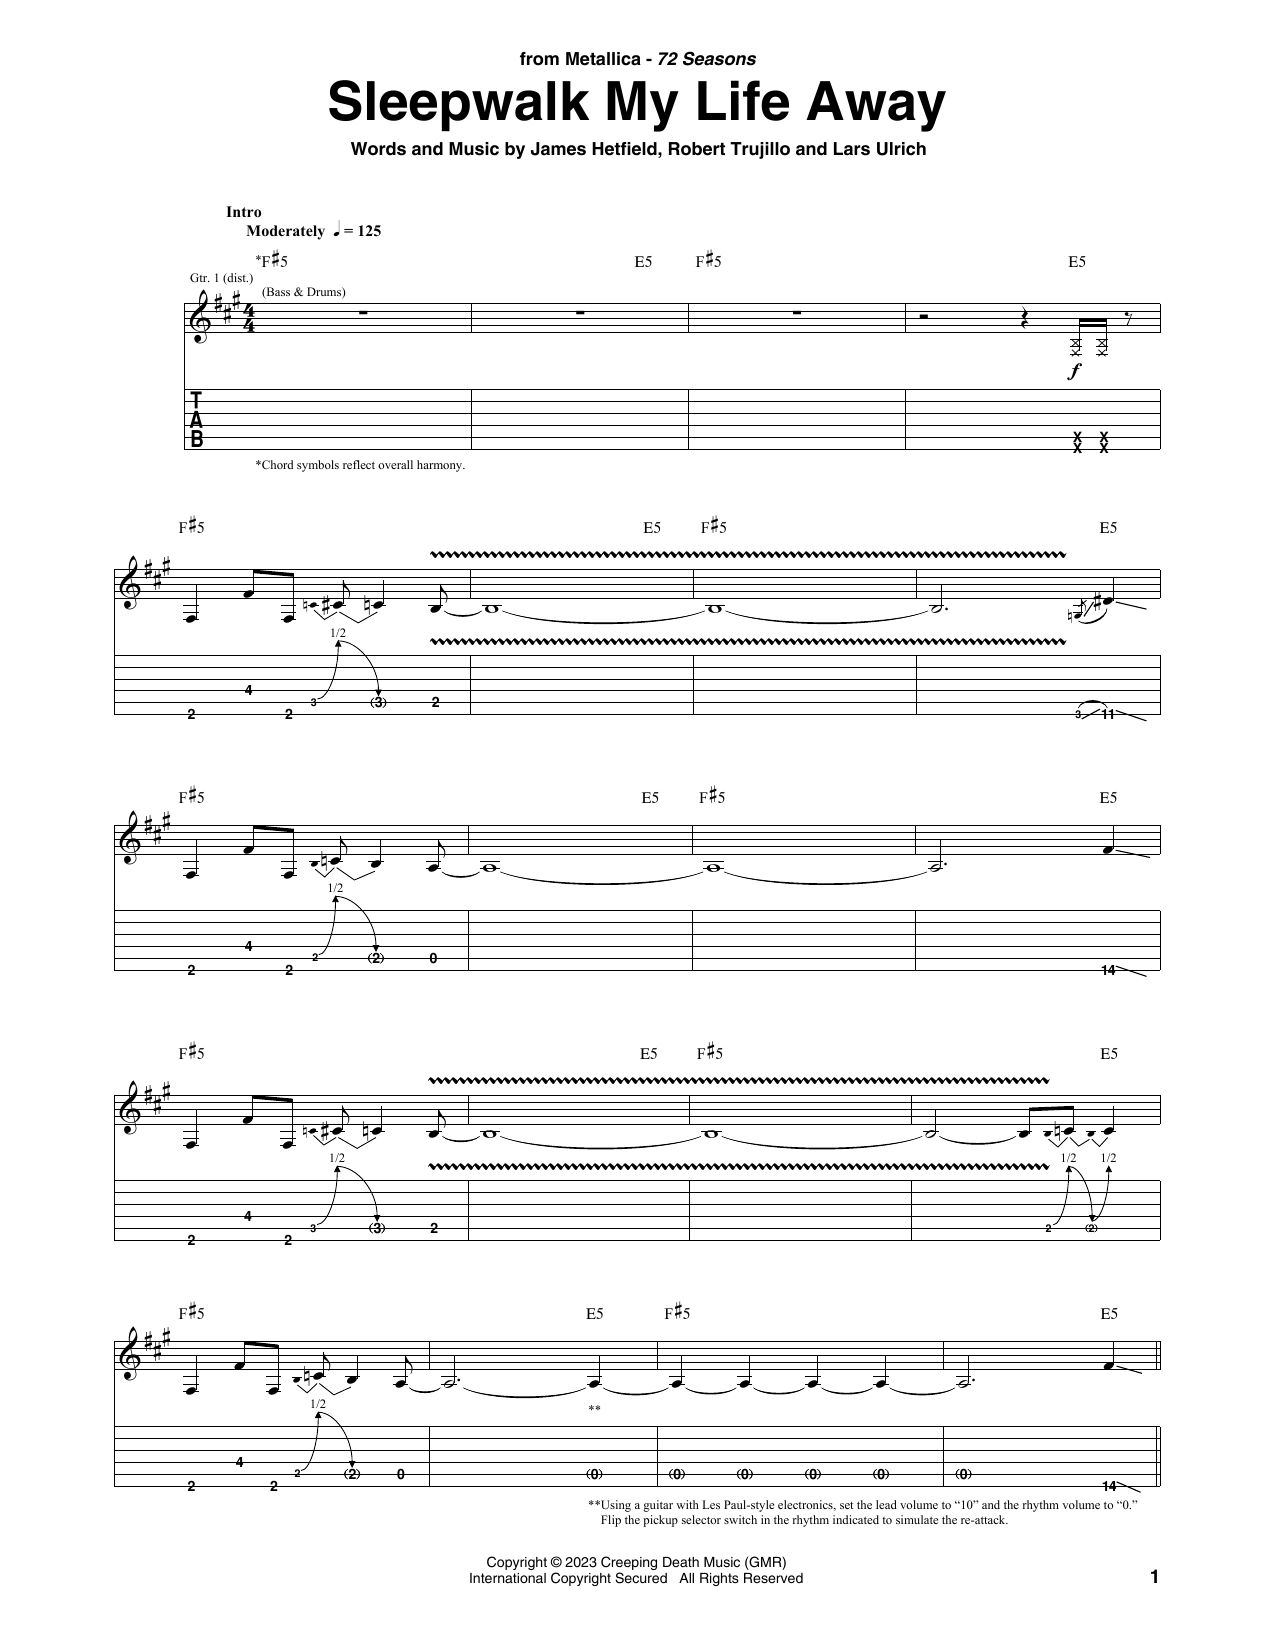 Download Metallica Sleepwalk My Life Away Sheet Music and learn how to play Guitar Tab PDF digital score in minutes